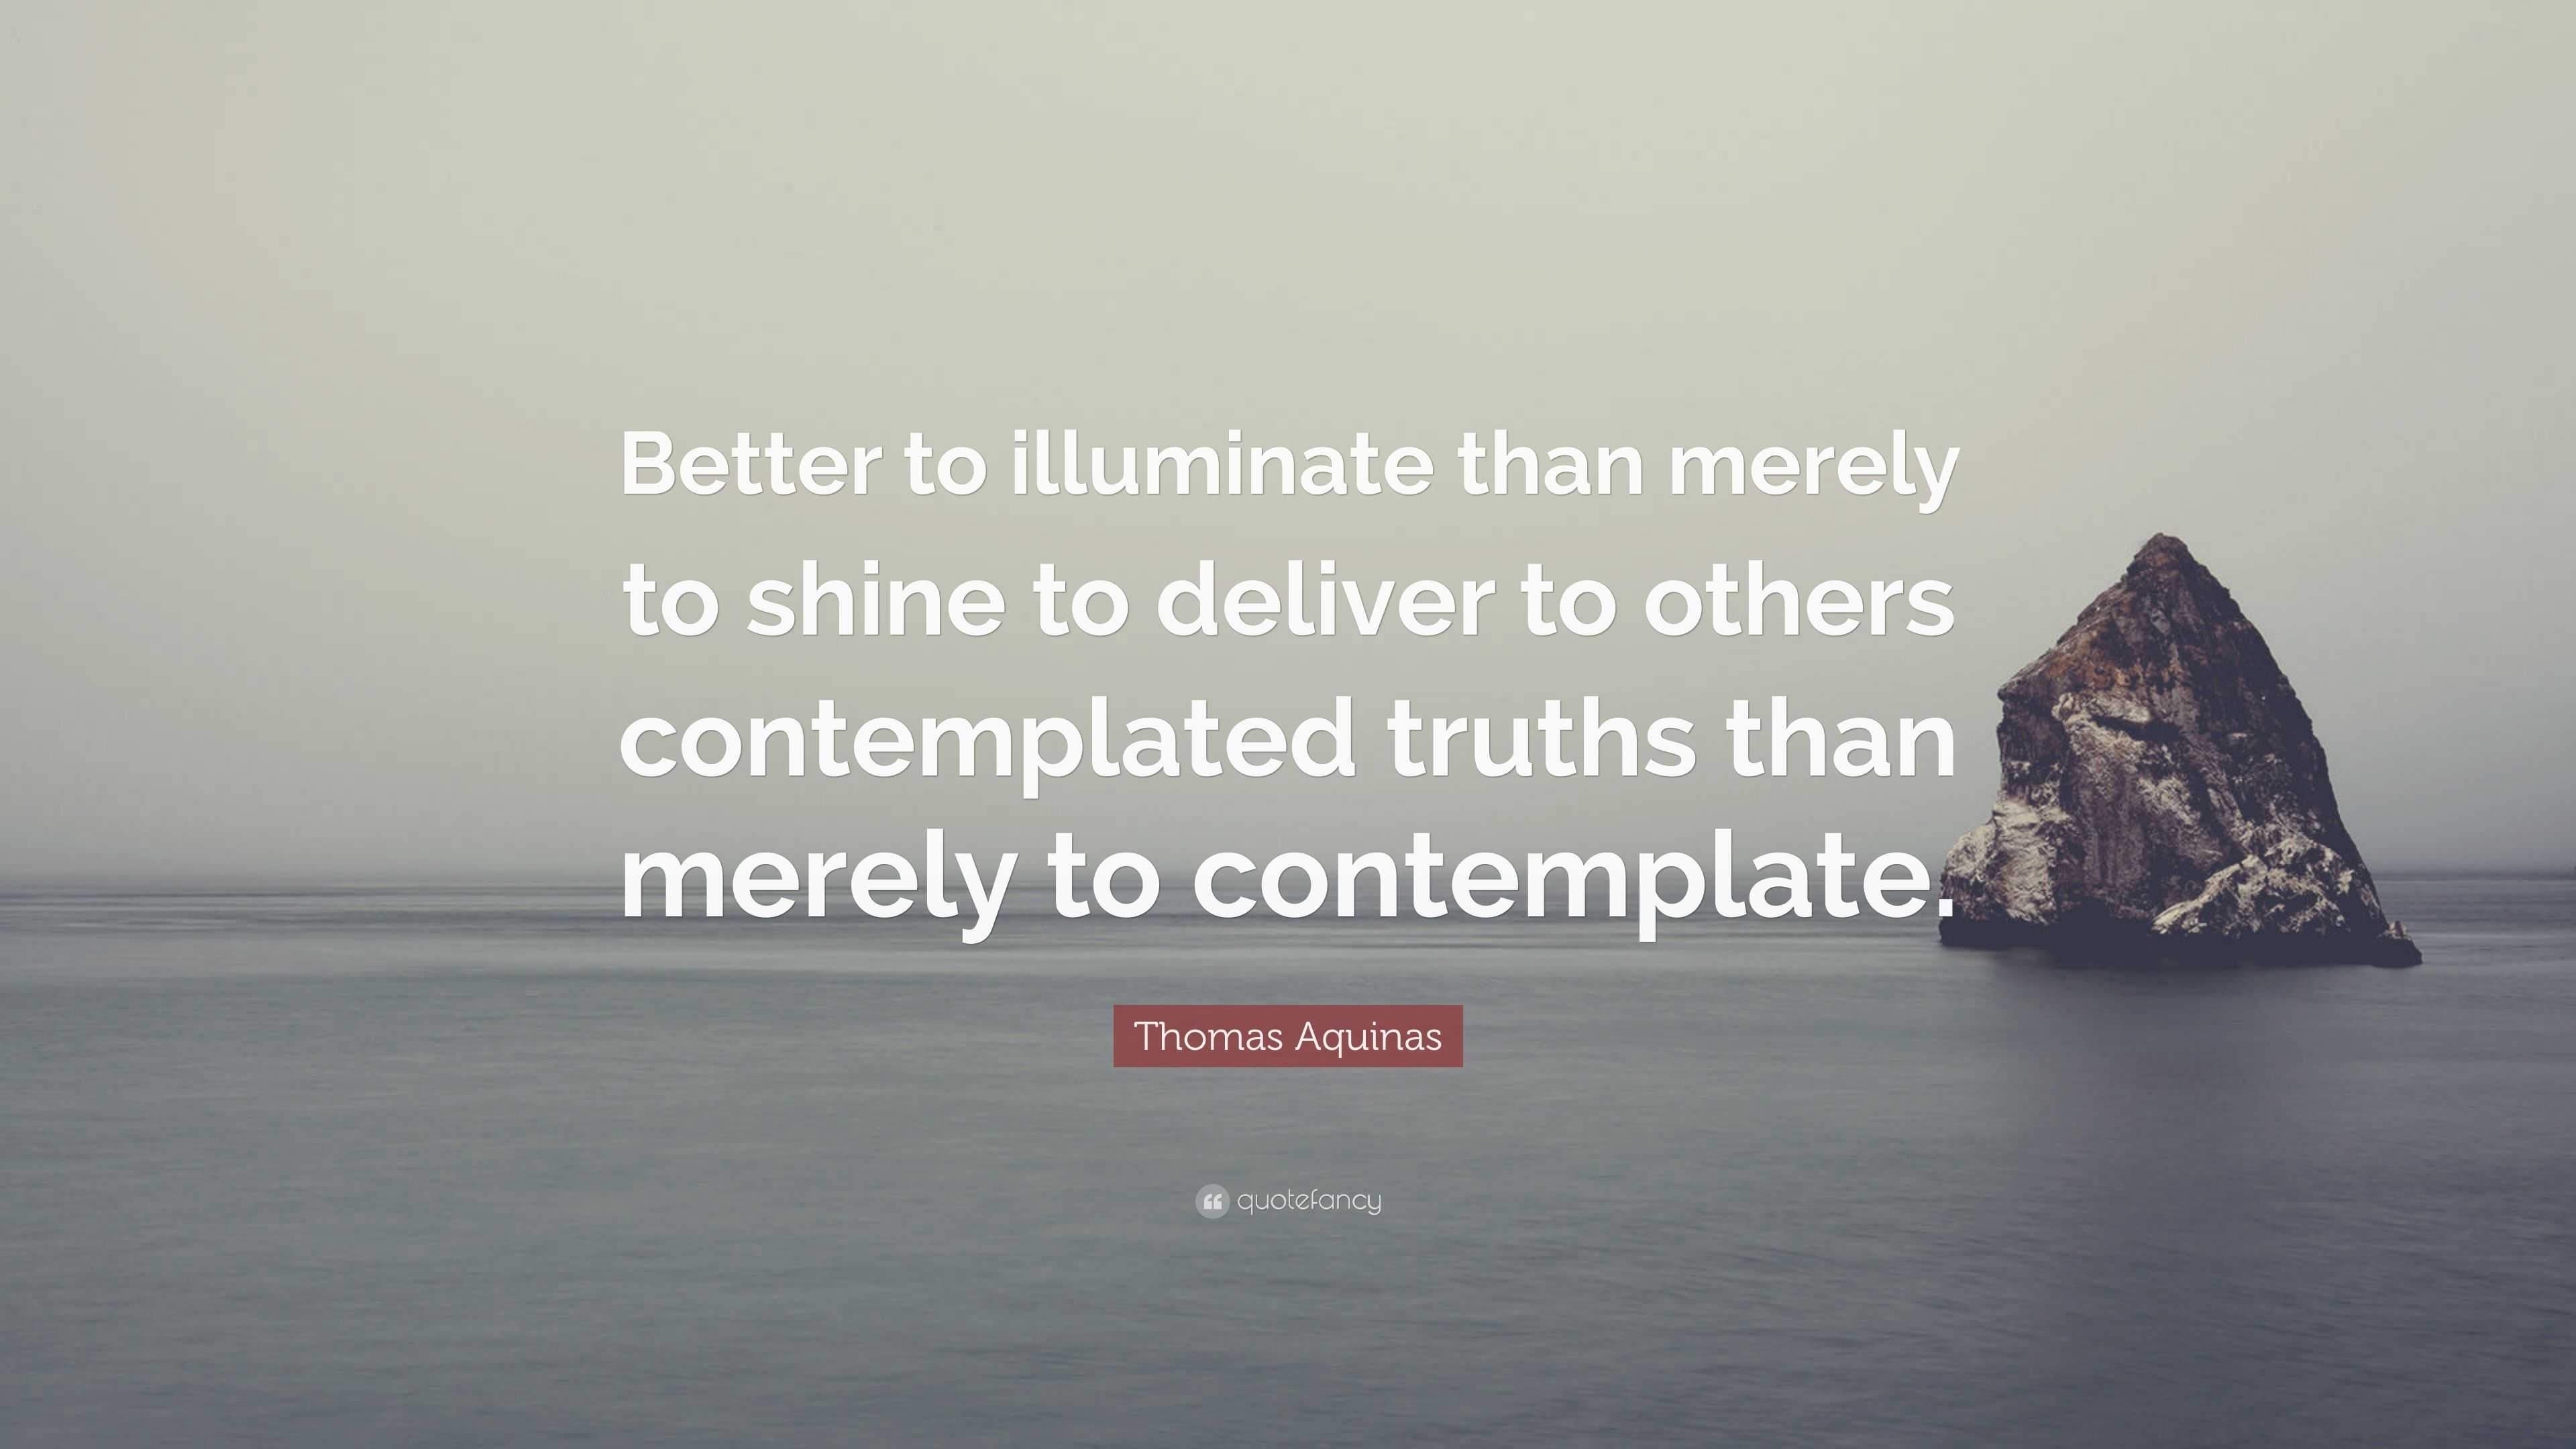 Thomas Aquinas Quote: “Better to illuminate than merely to shine to ...